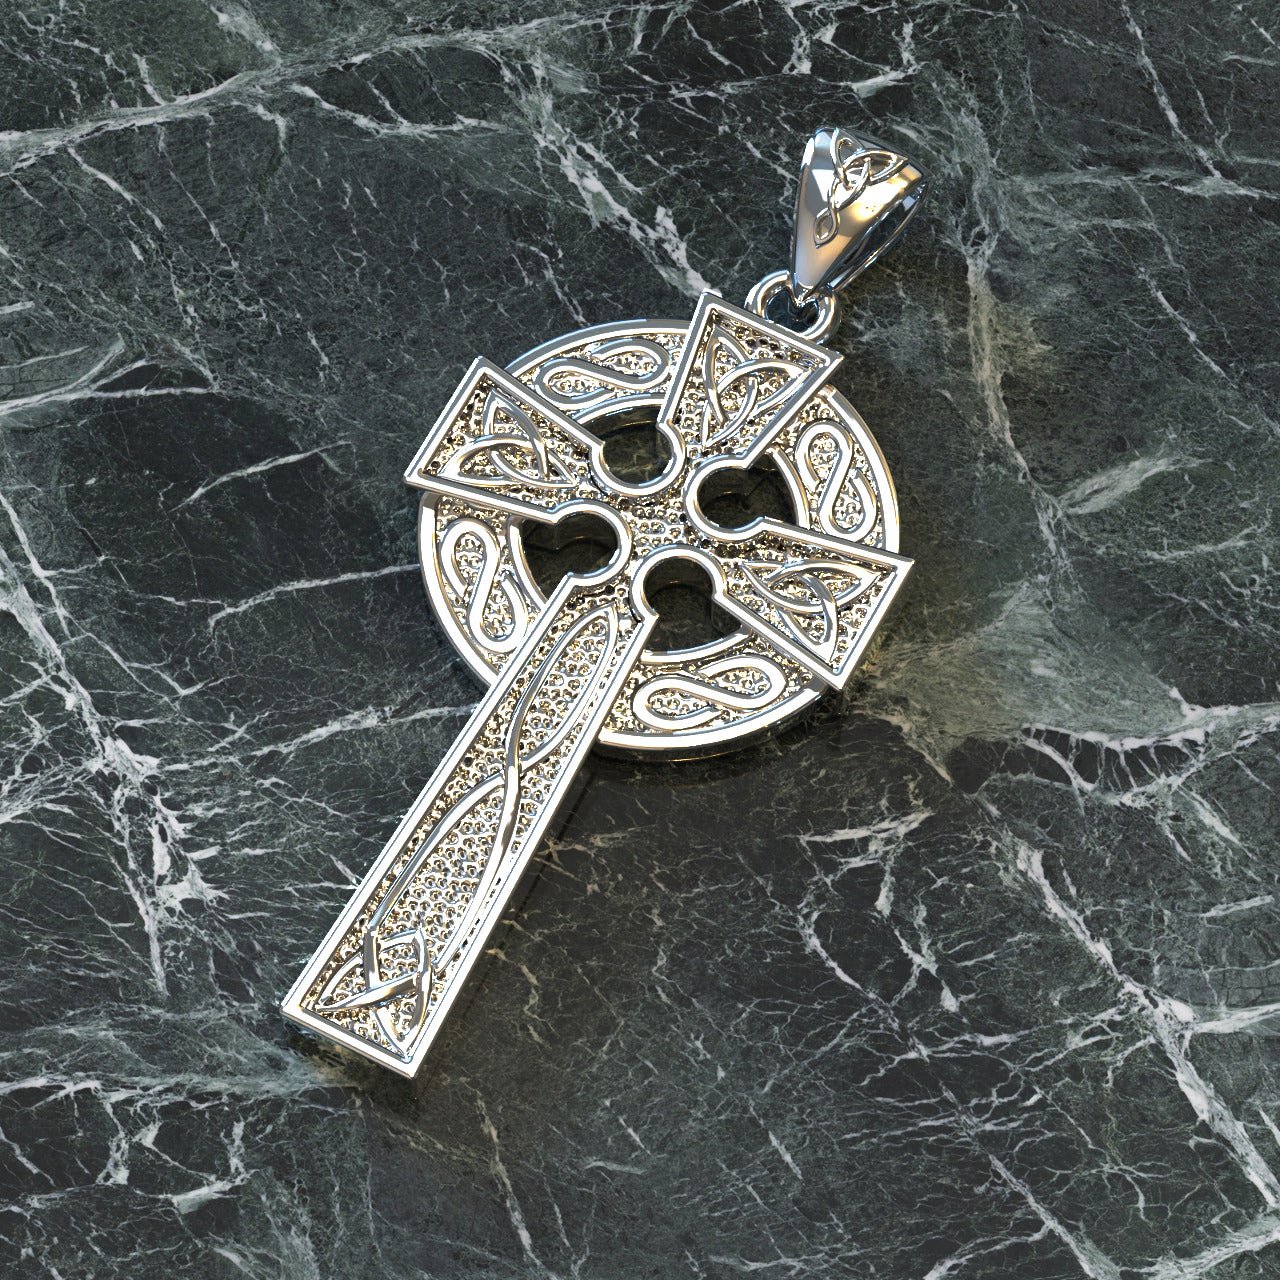 US Jewels Men's XL 925 Sterling Silver 58mm Irish Celtic Knot Cross Polished Finish Pendant Necklace, 58mm - US Jewels